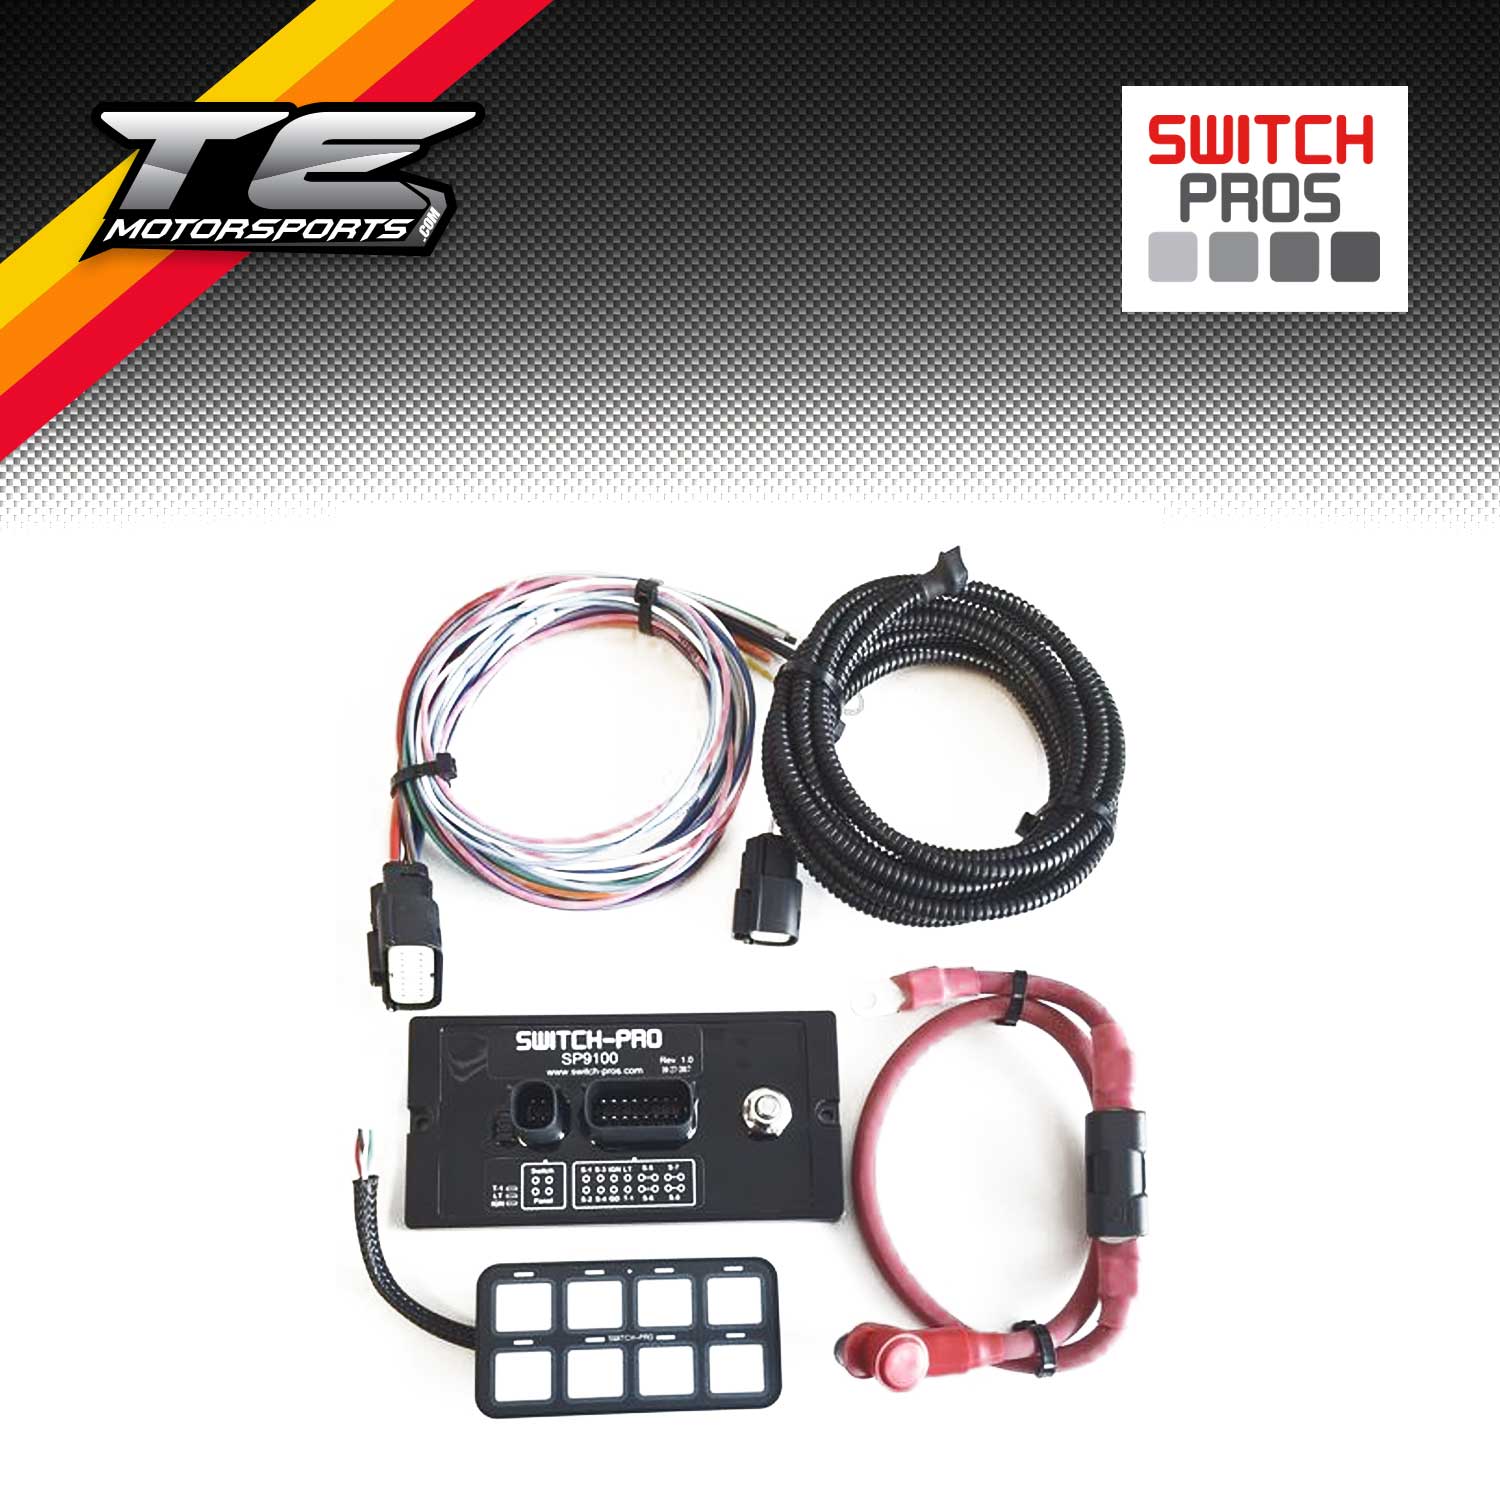 Switch Pros SP9100 SWITCH PANEL POWER SYSTEM